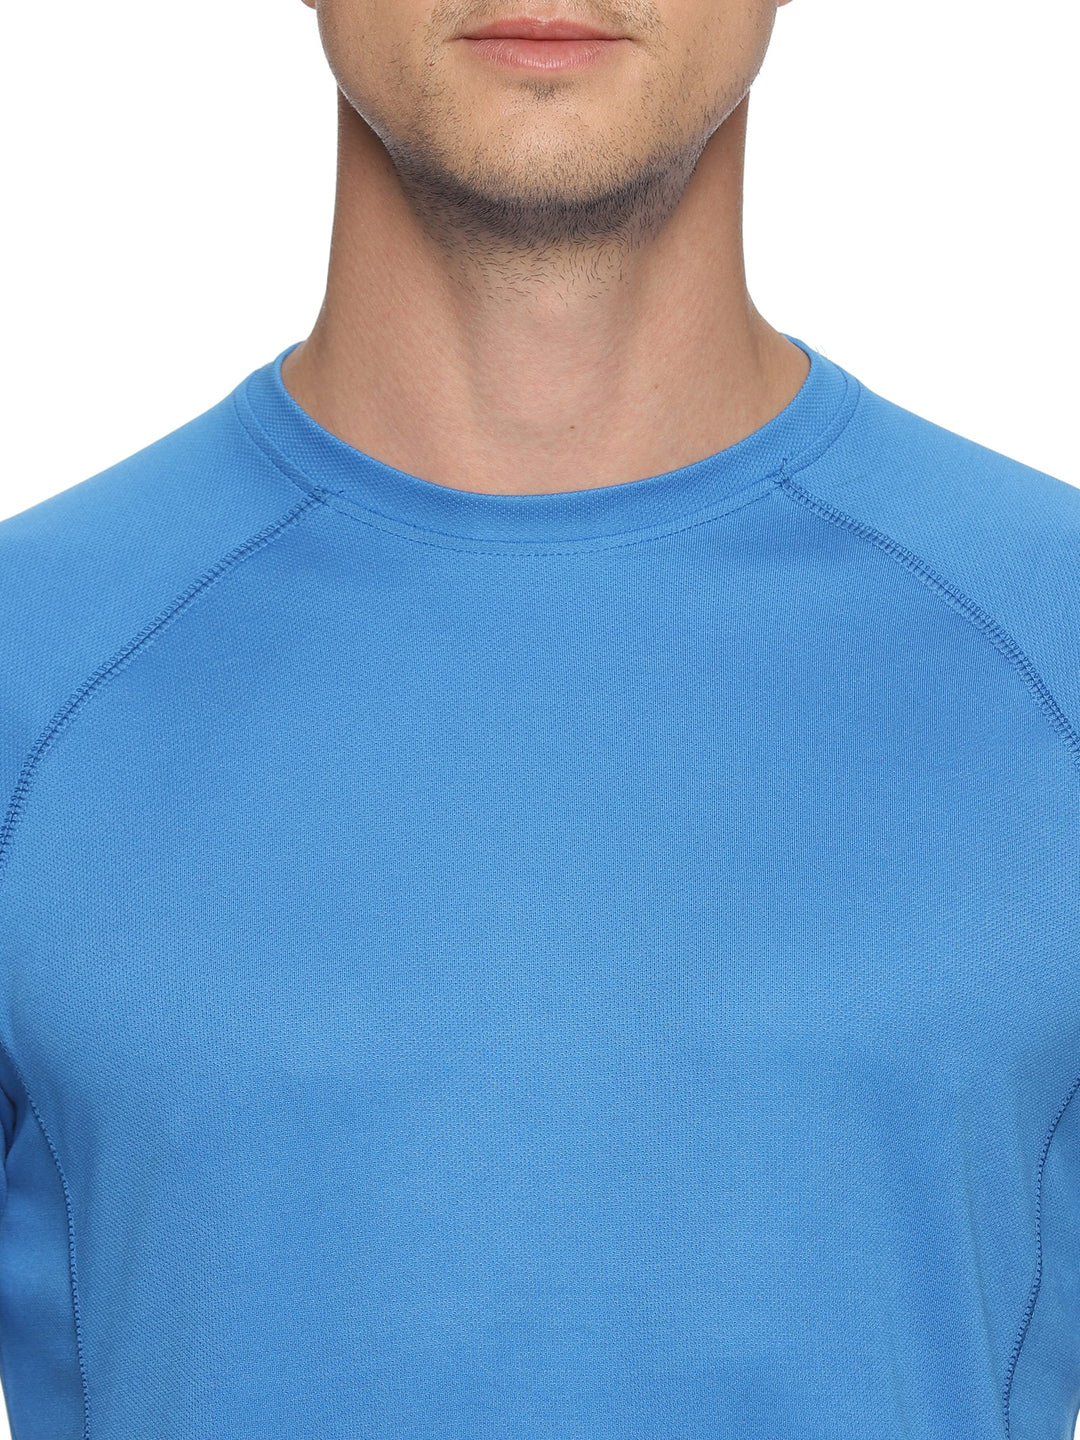 Men's Breathable Raglan sleeves Training T-shirt (Blue)